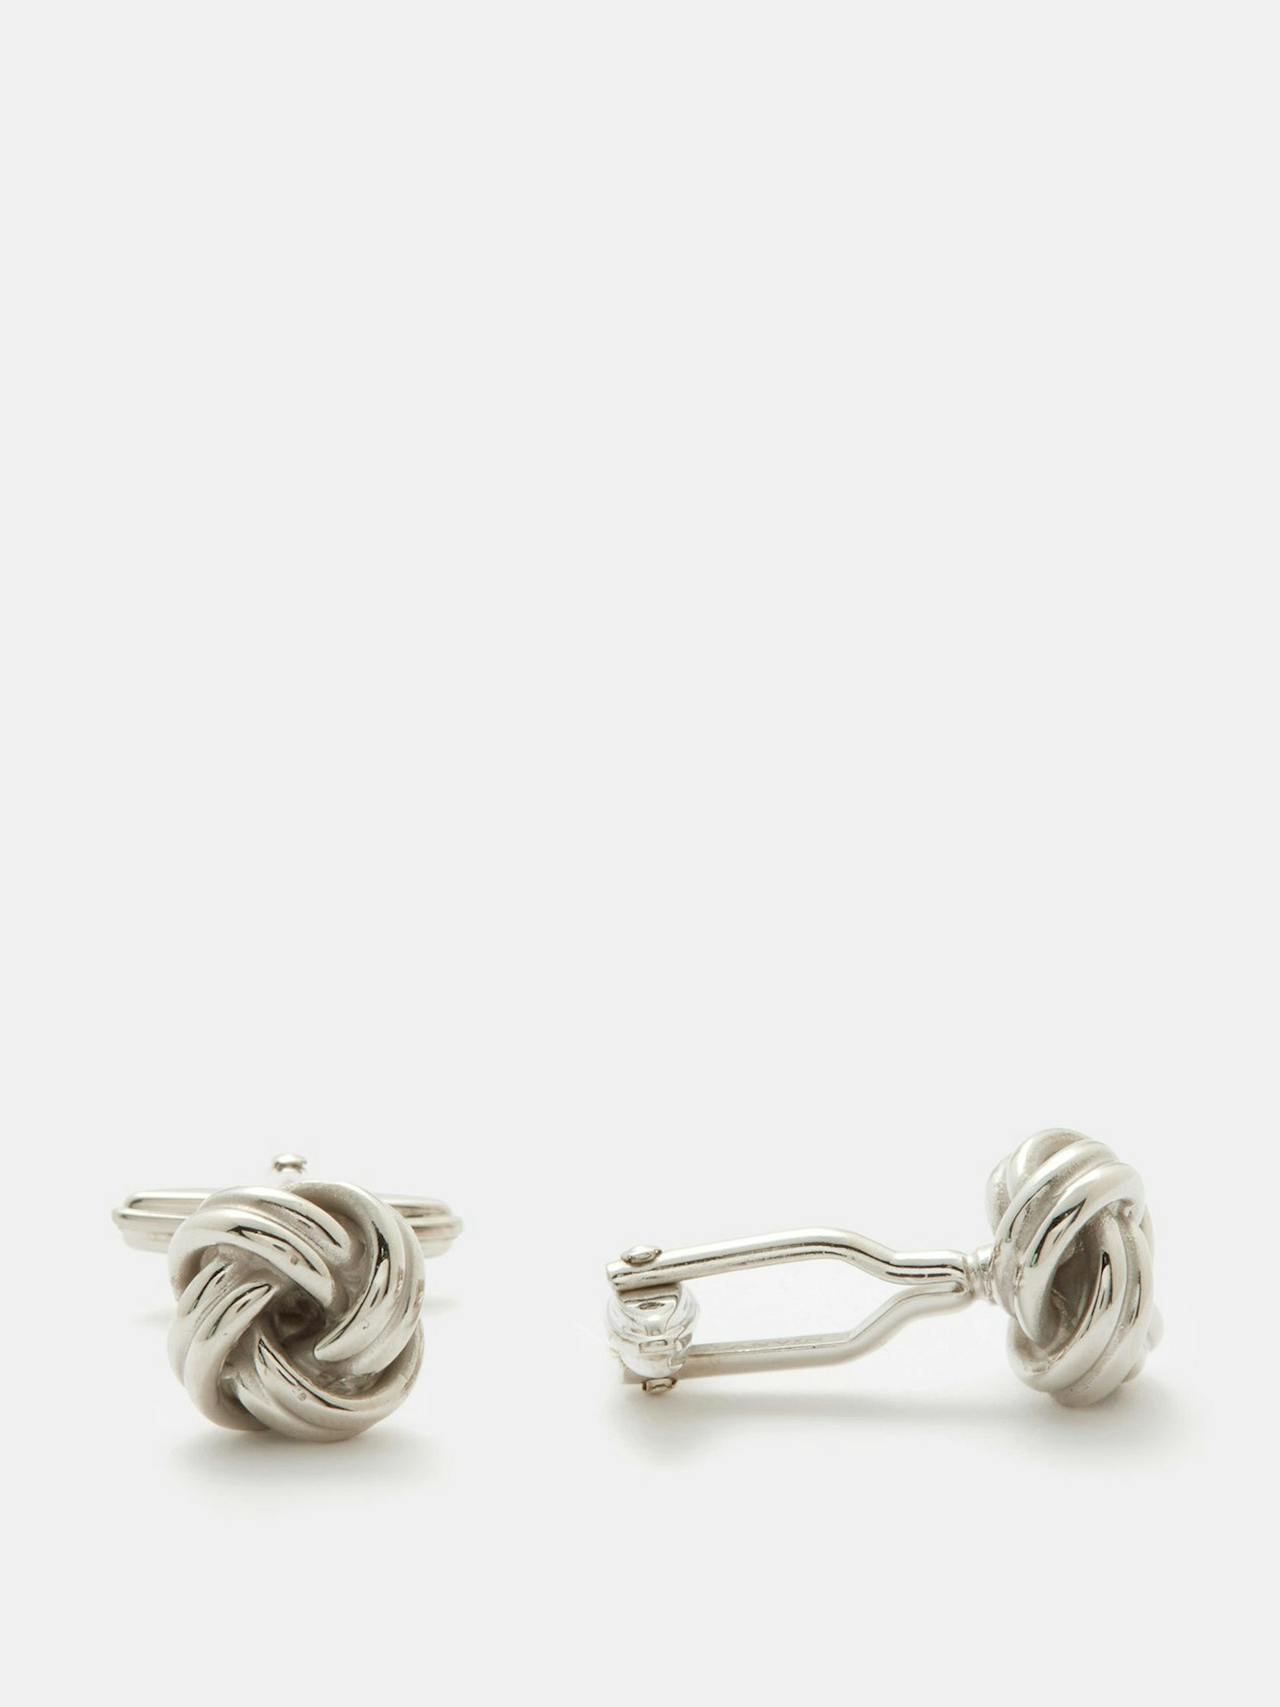 Knot platinum-plated cufflinks